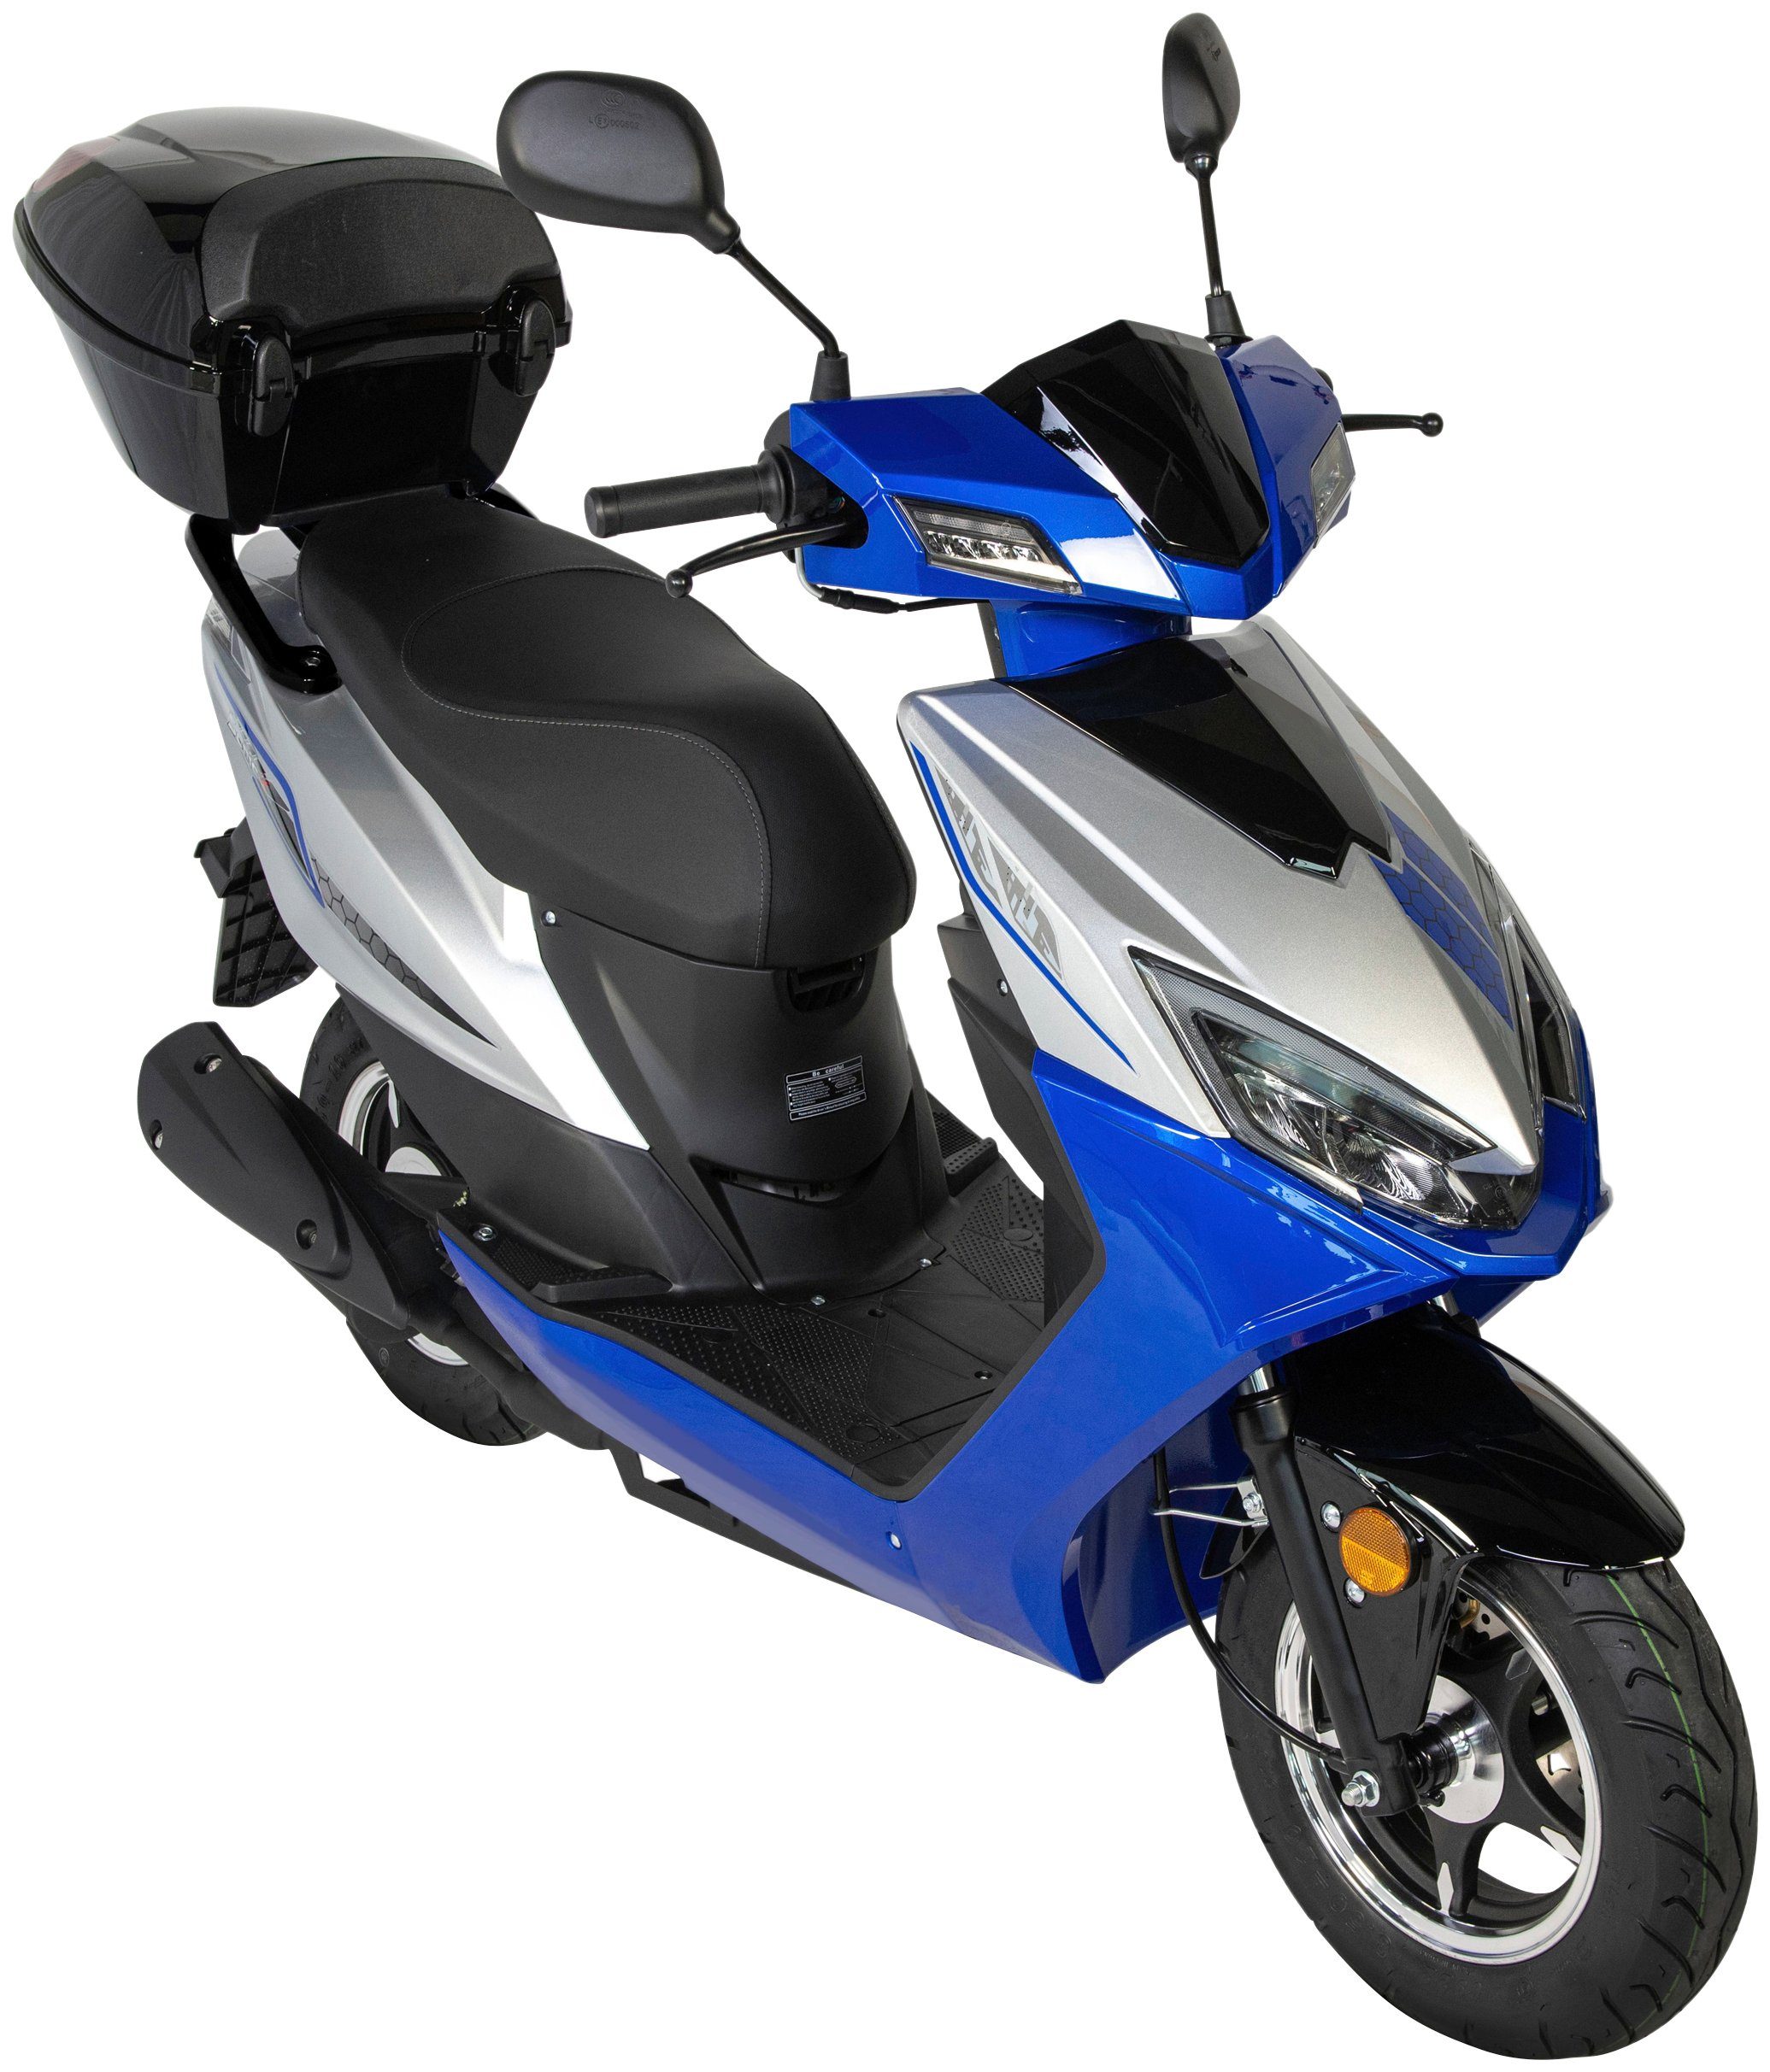 GT UNION Motorroller Sonic X 50-45, 50 ccm, 45 km/h, Euro 5, (Komplett-Set, 2 tlg., mit Topcase), inkl. Topcase königsblau-silber | Motorroller